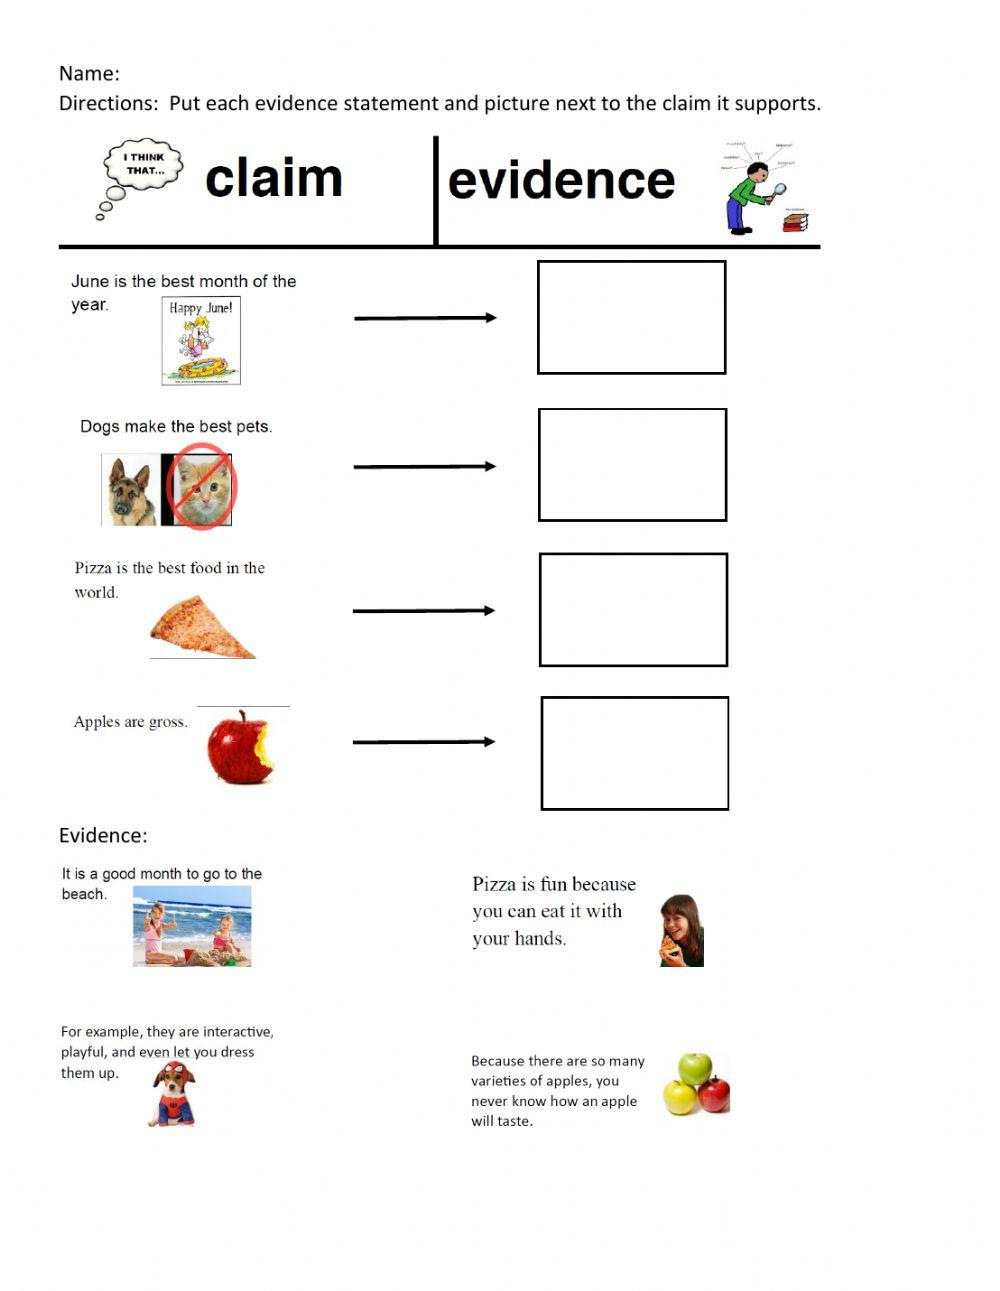 Claim and evidence